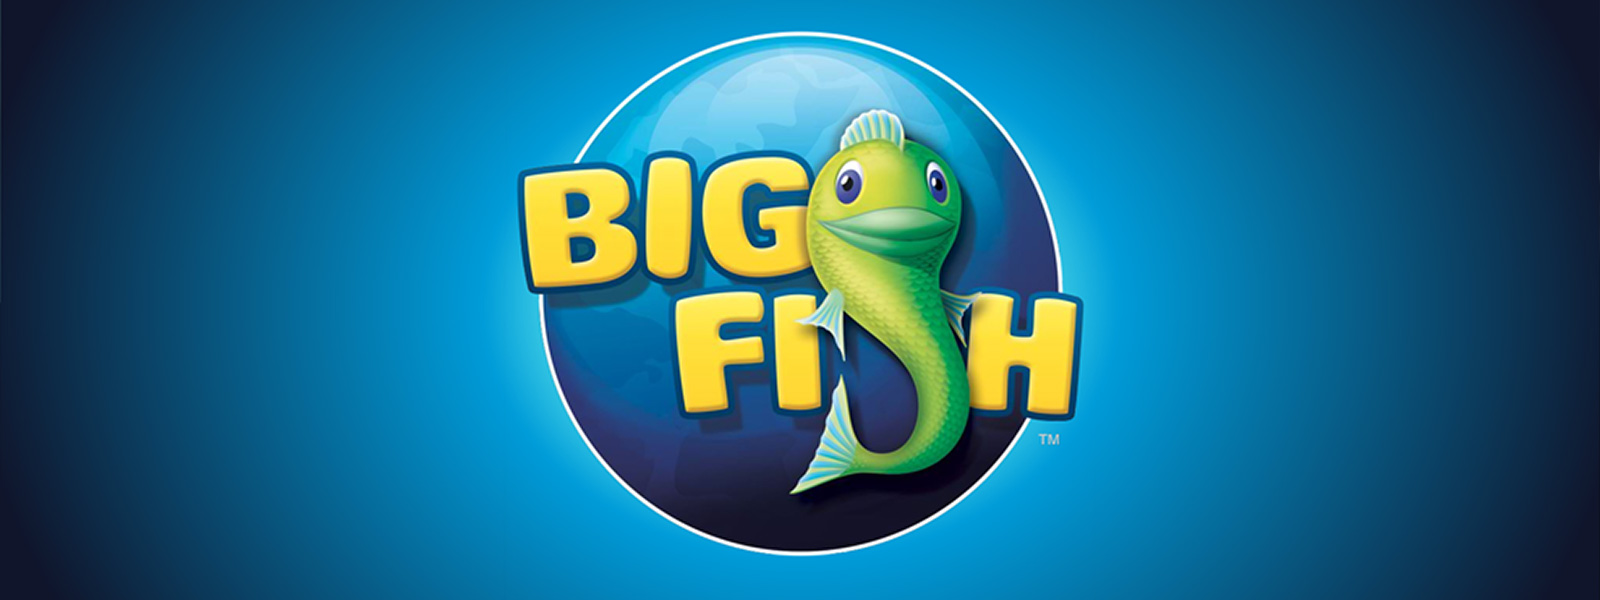 Big Fish Games Logo